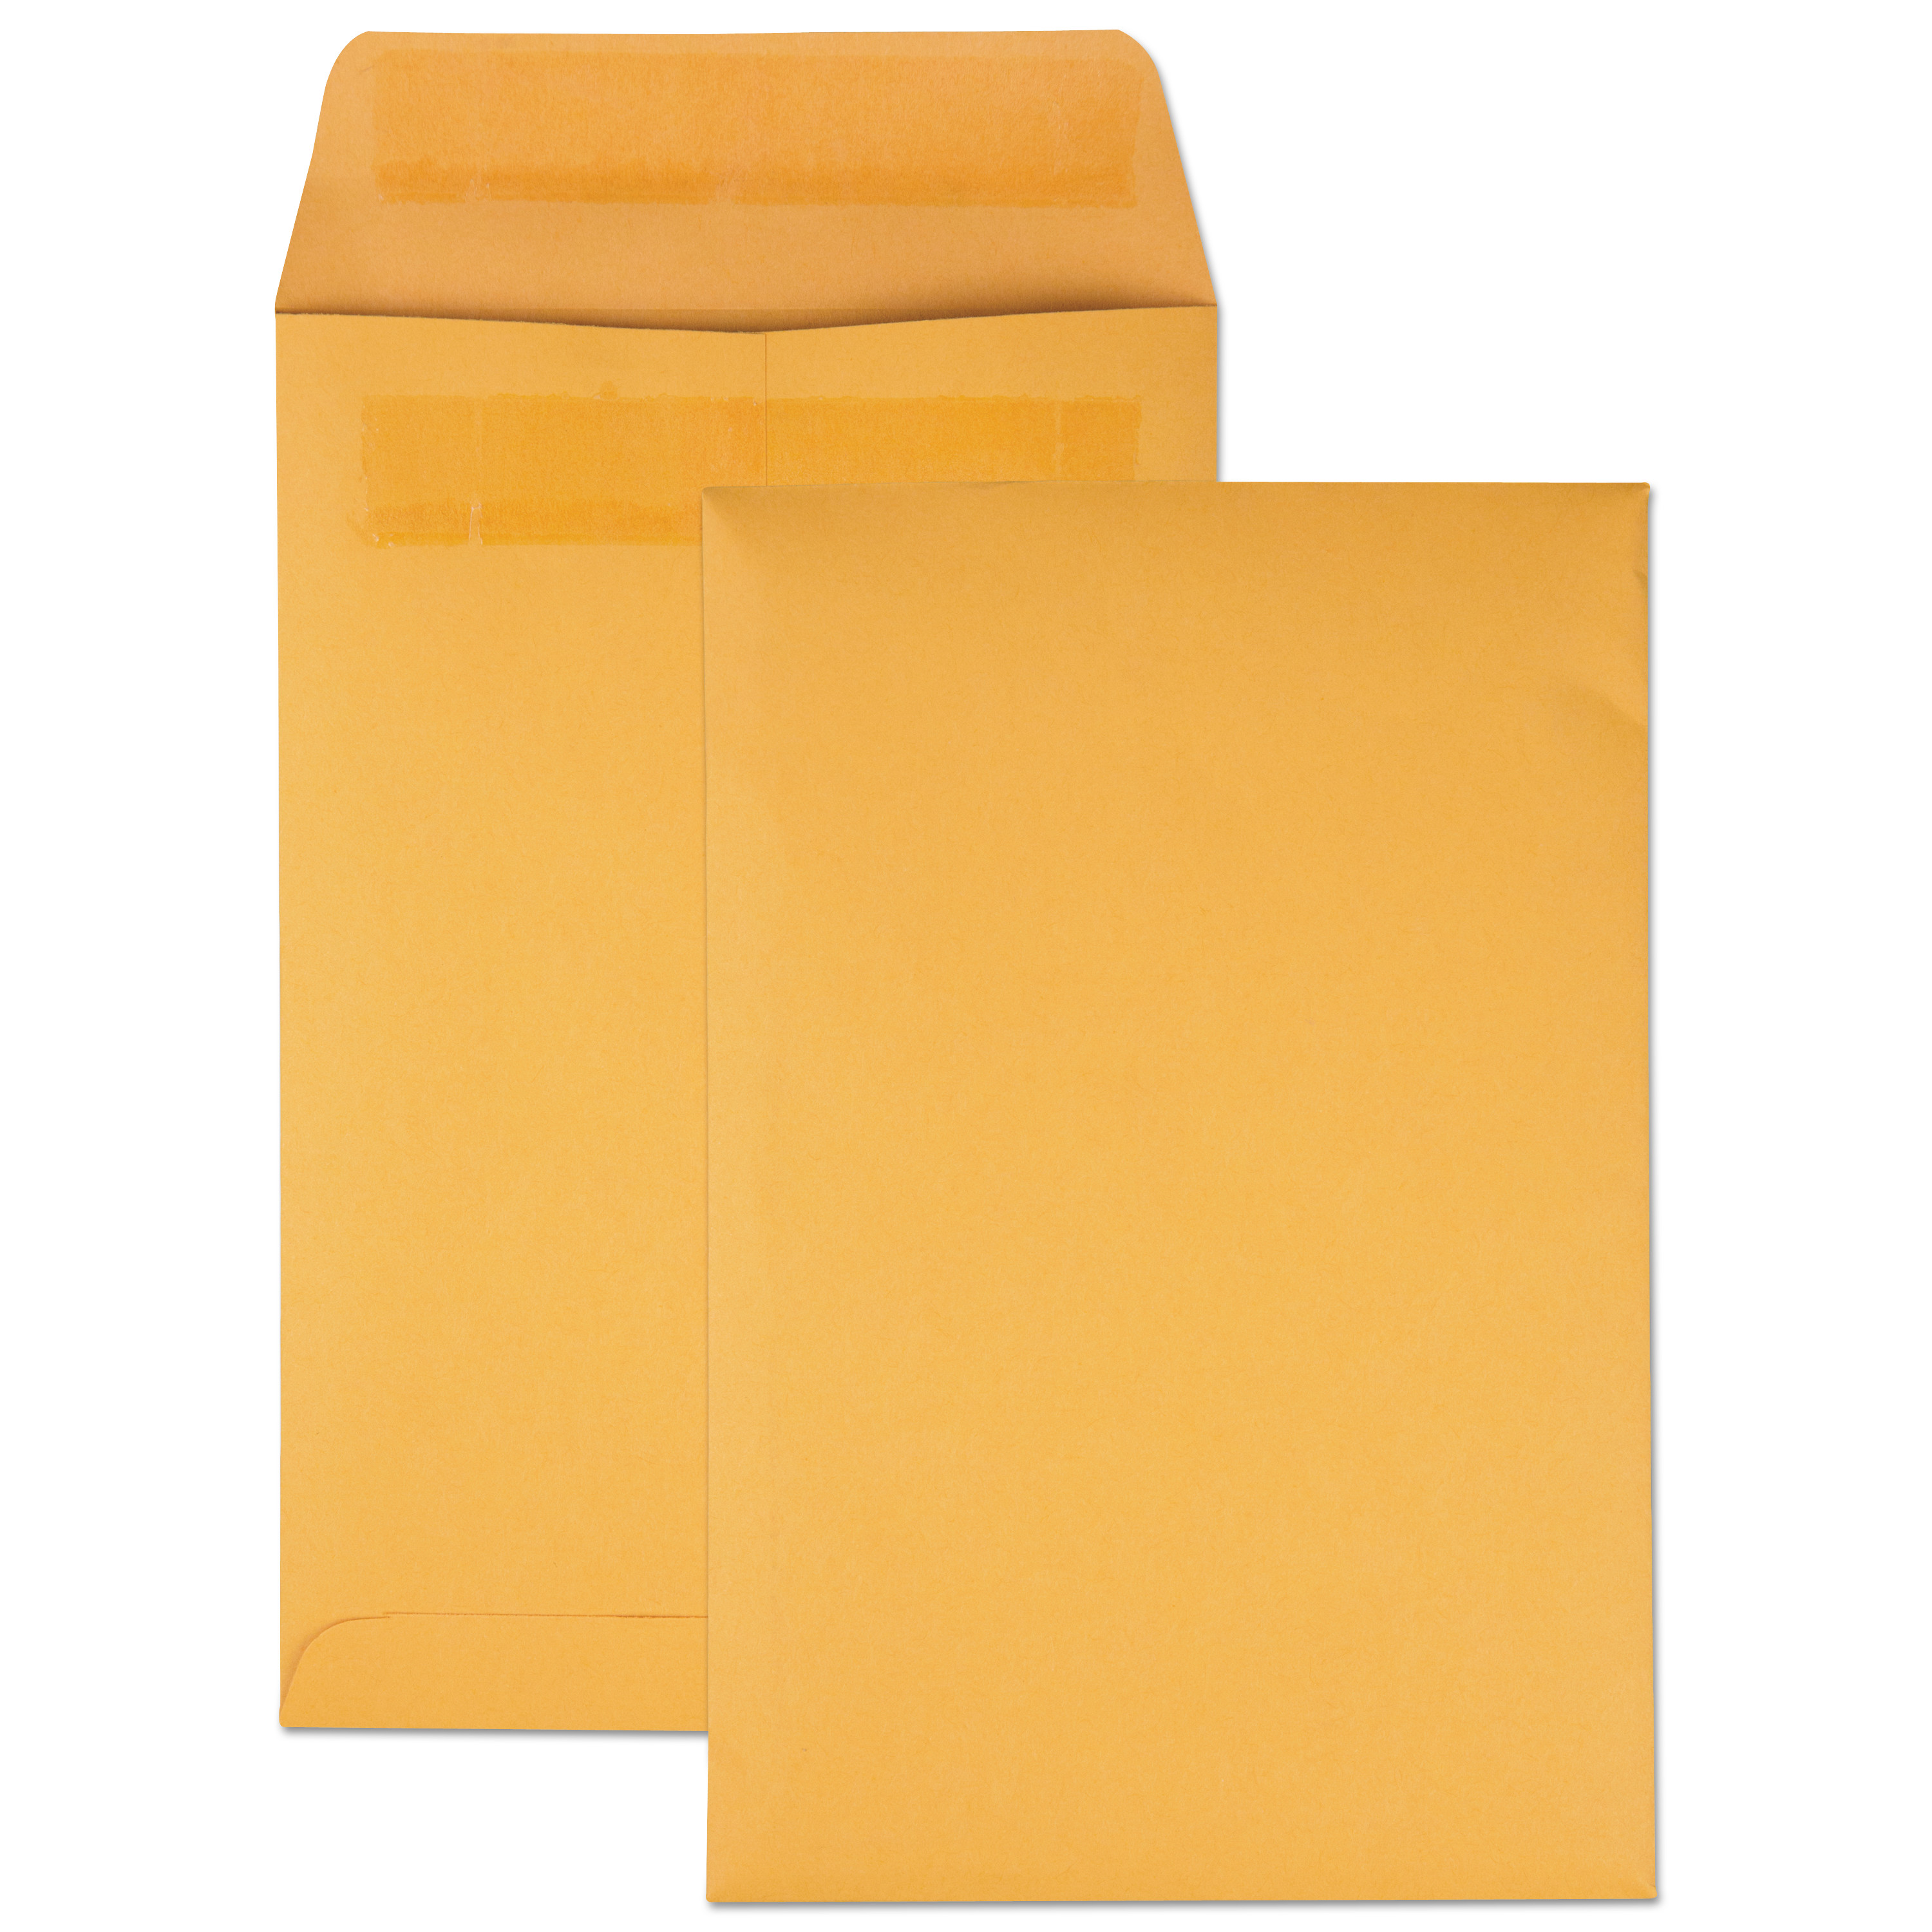 Redi-Seal Catalog Envelope, #1, Cheese Blade Flap, Redi-Seal Closure, 6 x 9, Brown Kraft, 100/Box